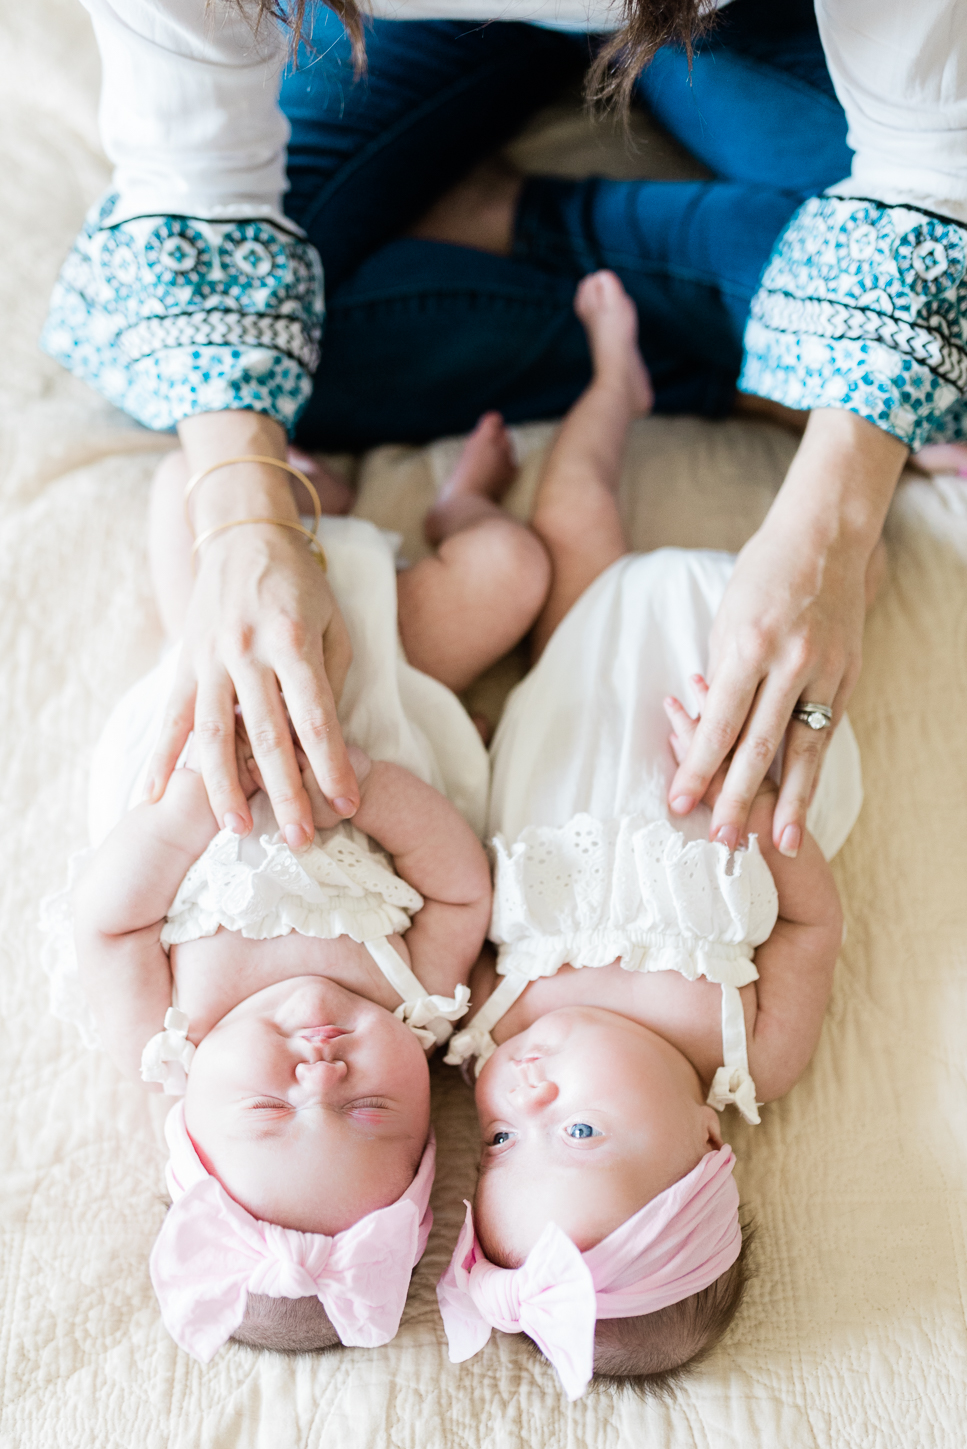 Baltimore-newborn-photographer-BKLP-in home-lifestyle-maryland-twins-photos by-Breanna Kuhlmann-13.jpg